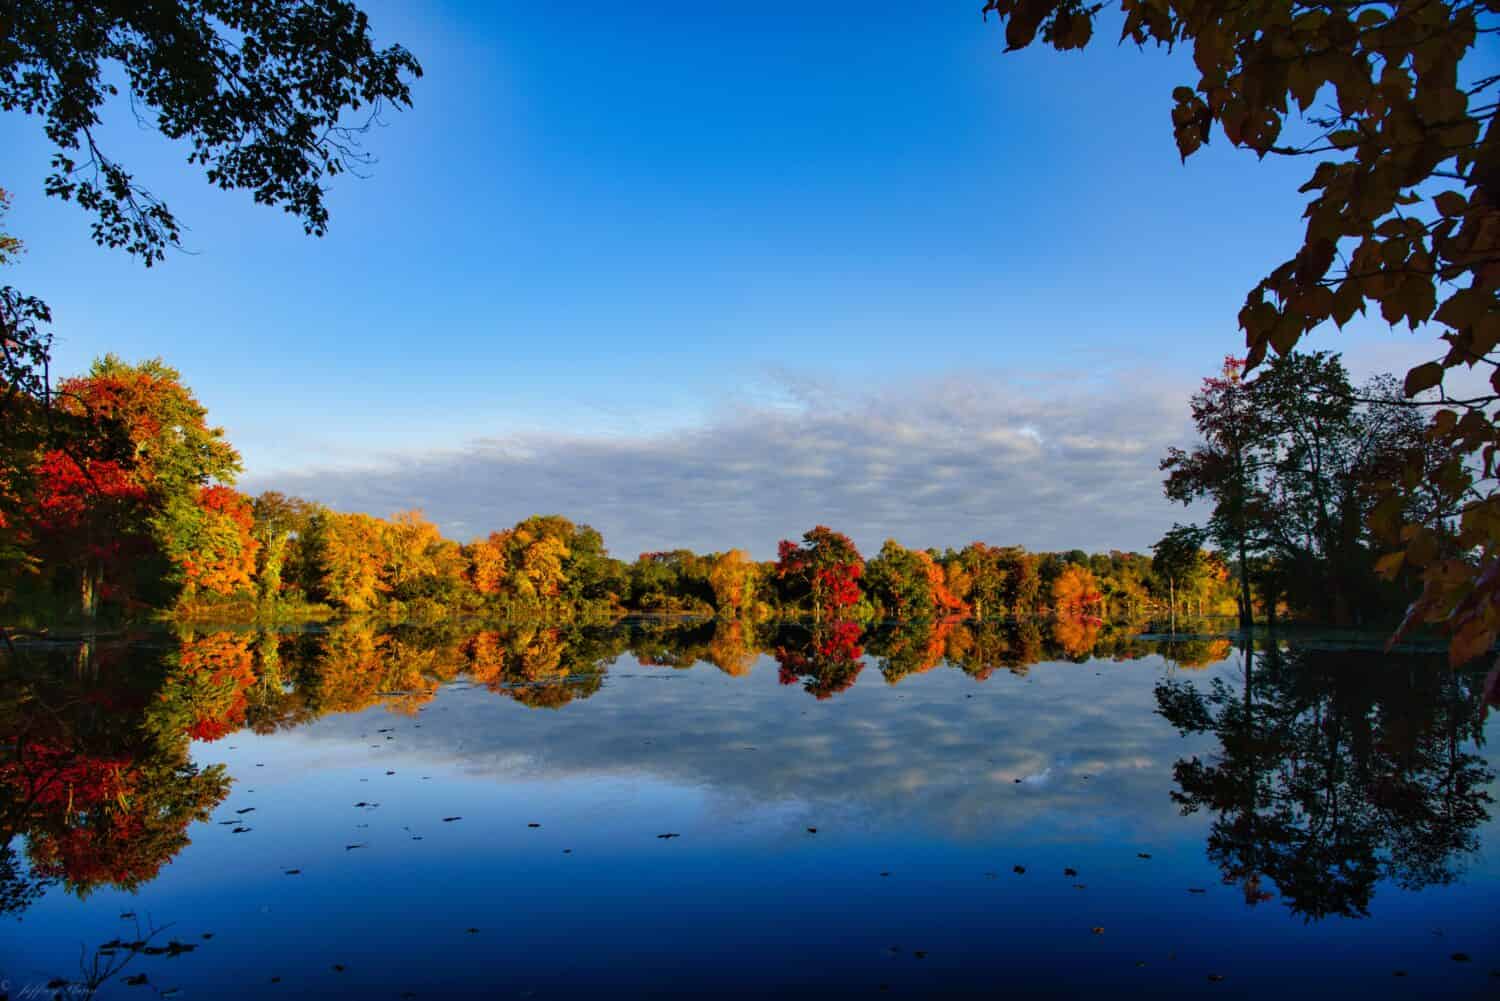 The beautiful autumn landscape with colorful foliage  Salem, Connecticut 